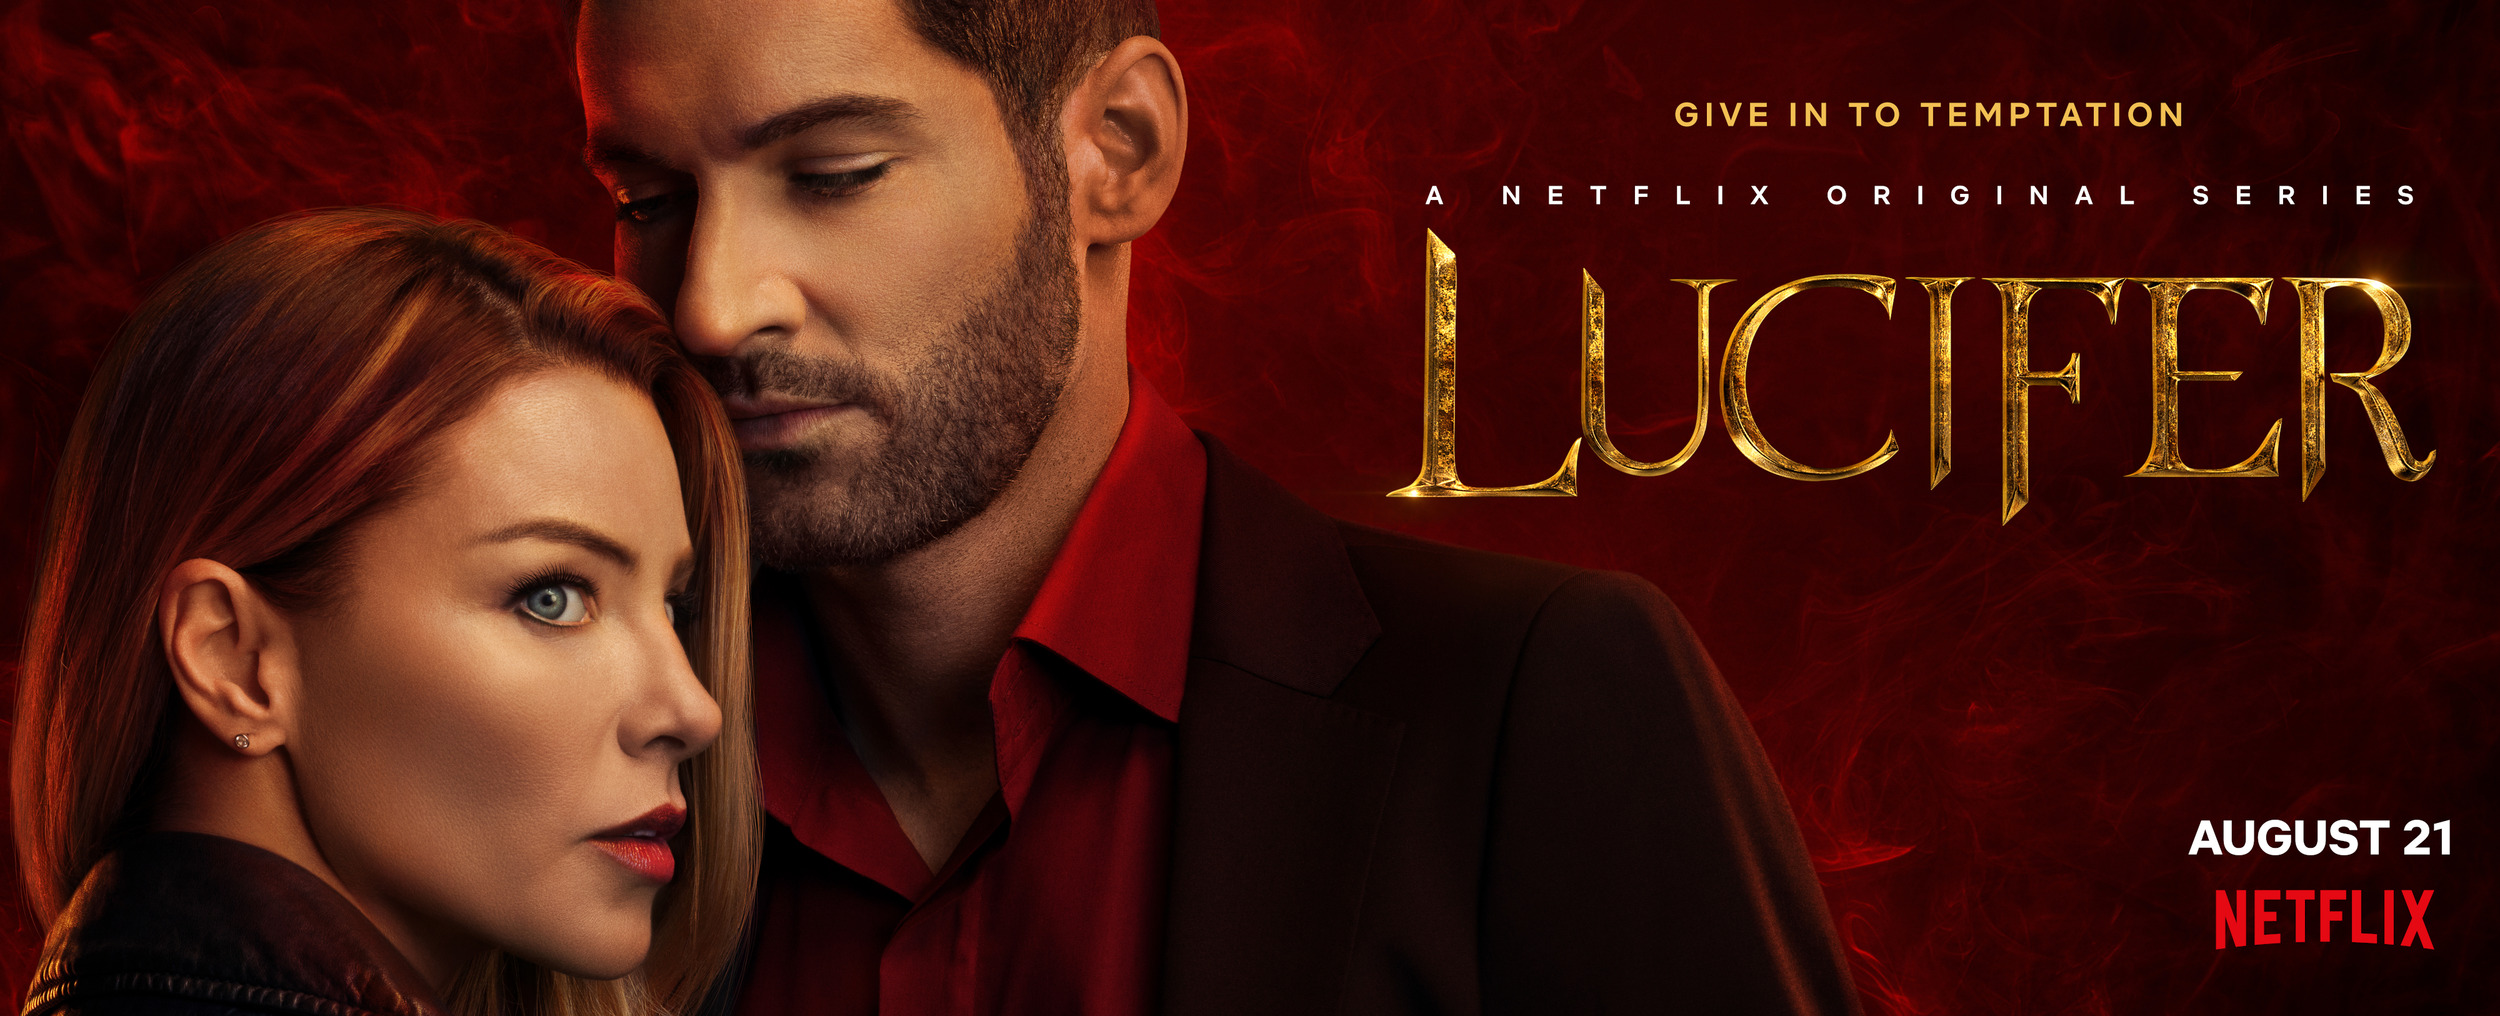 Mega Sized TV Poster Image for Lucifer (#11 of 22)